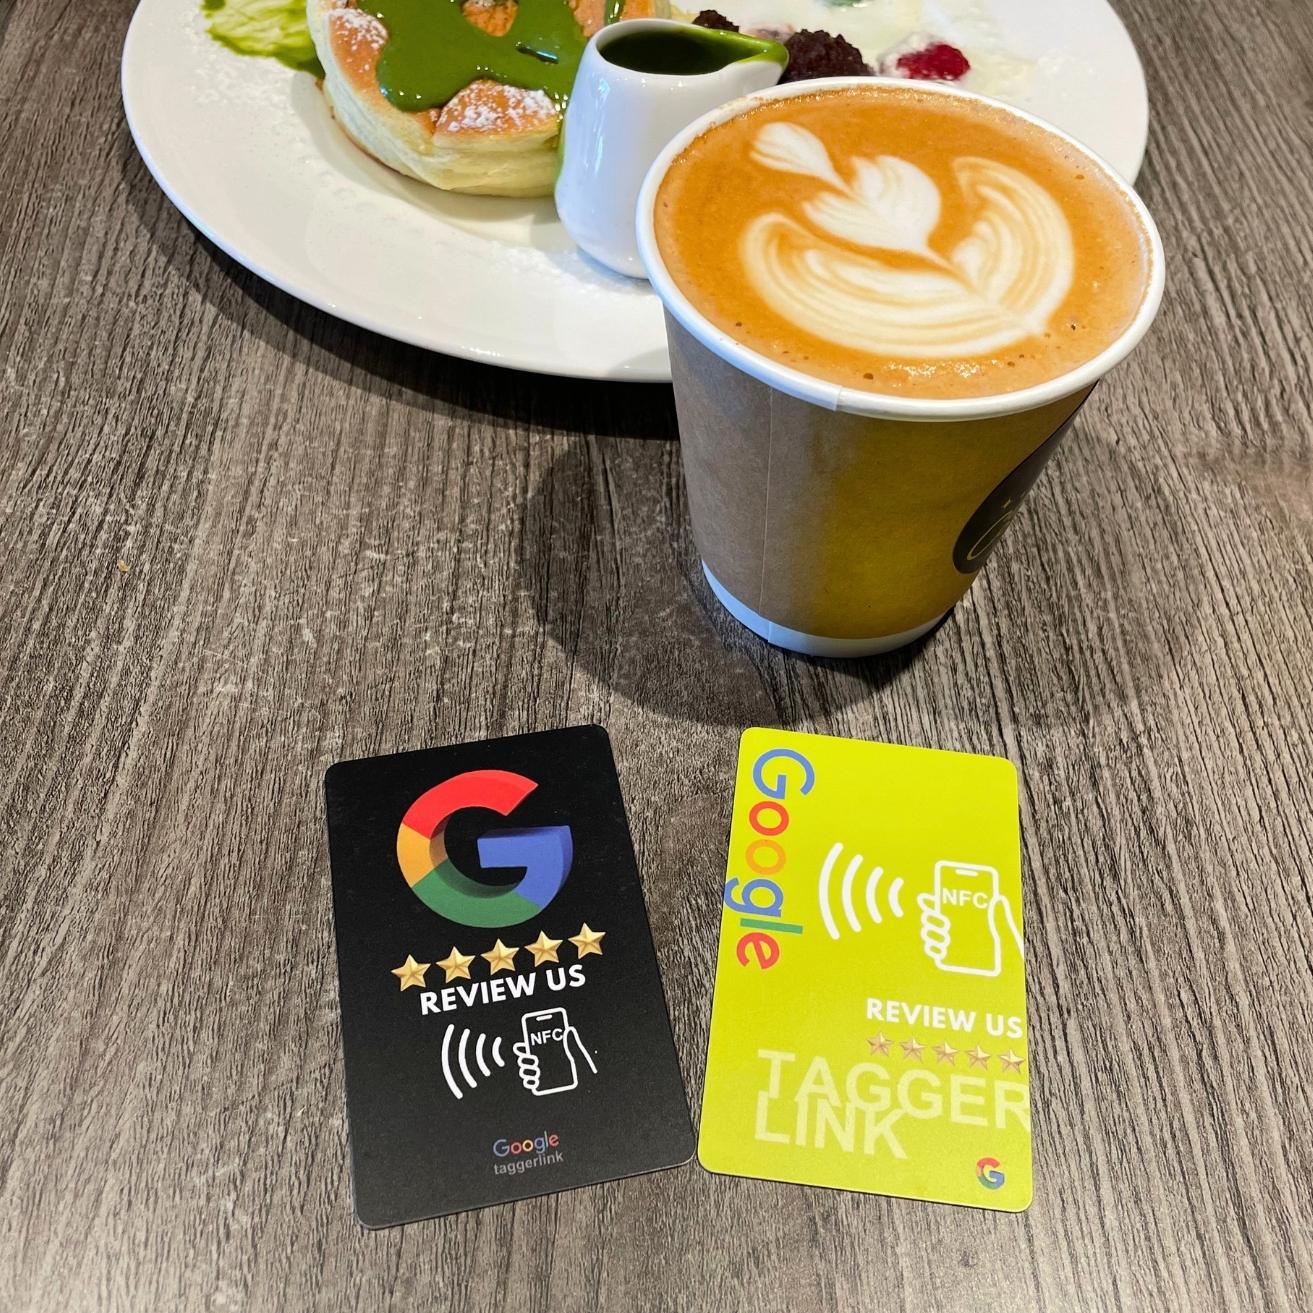 Google Review "Mi" Card